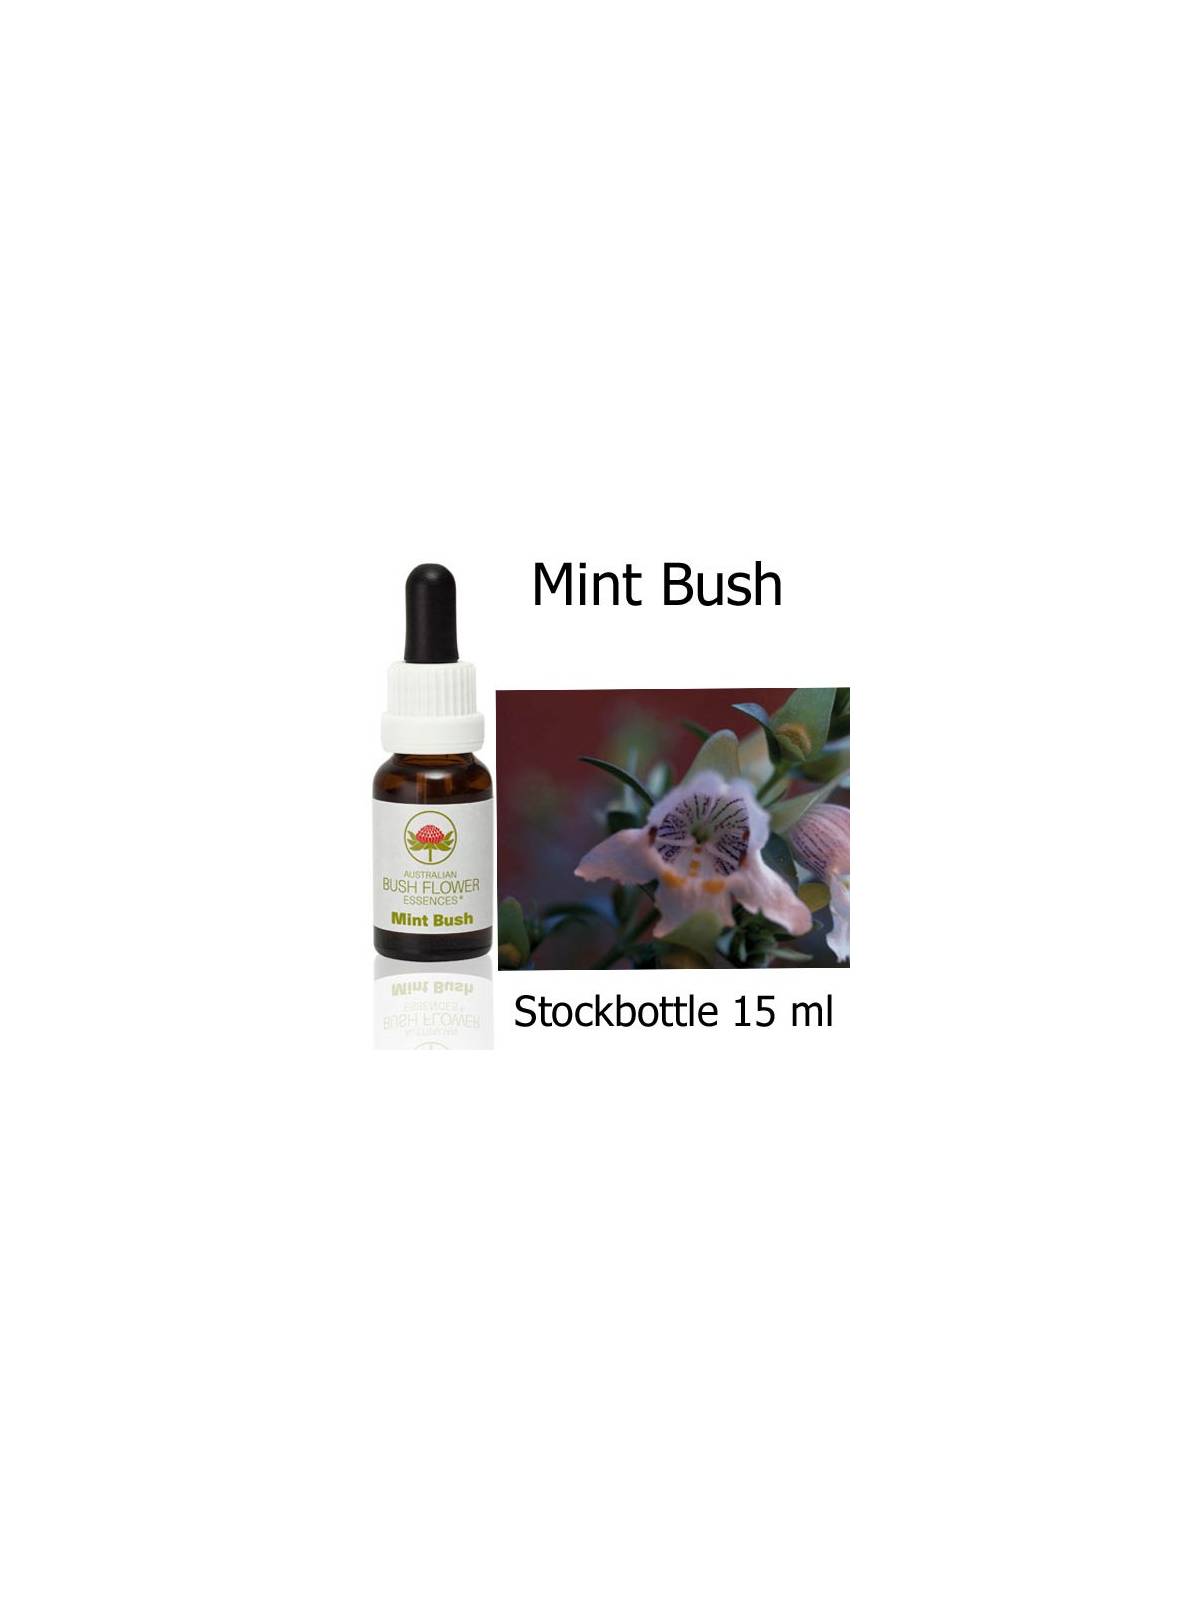 Mint Bush Australian Bush Flower Essences stockbottles